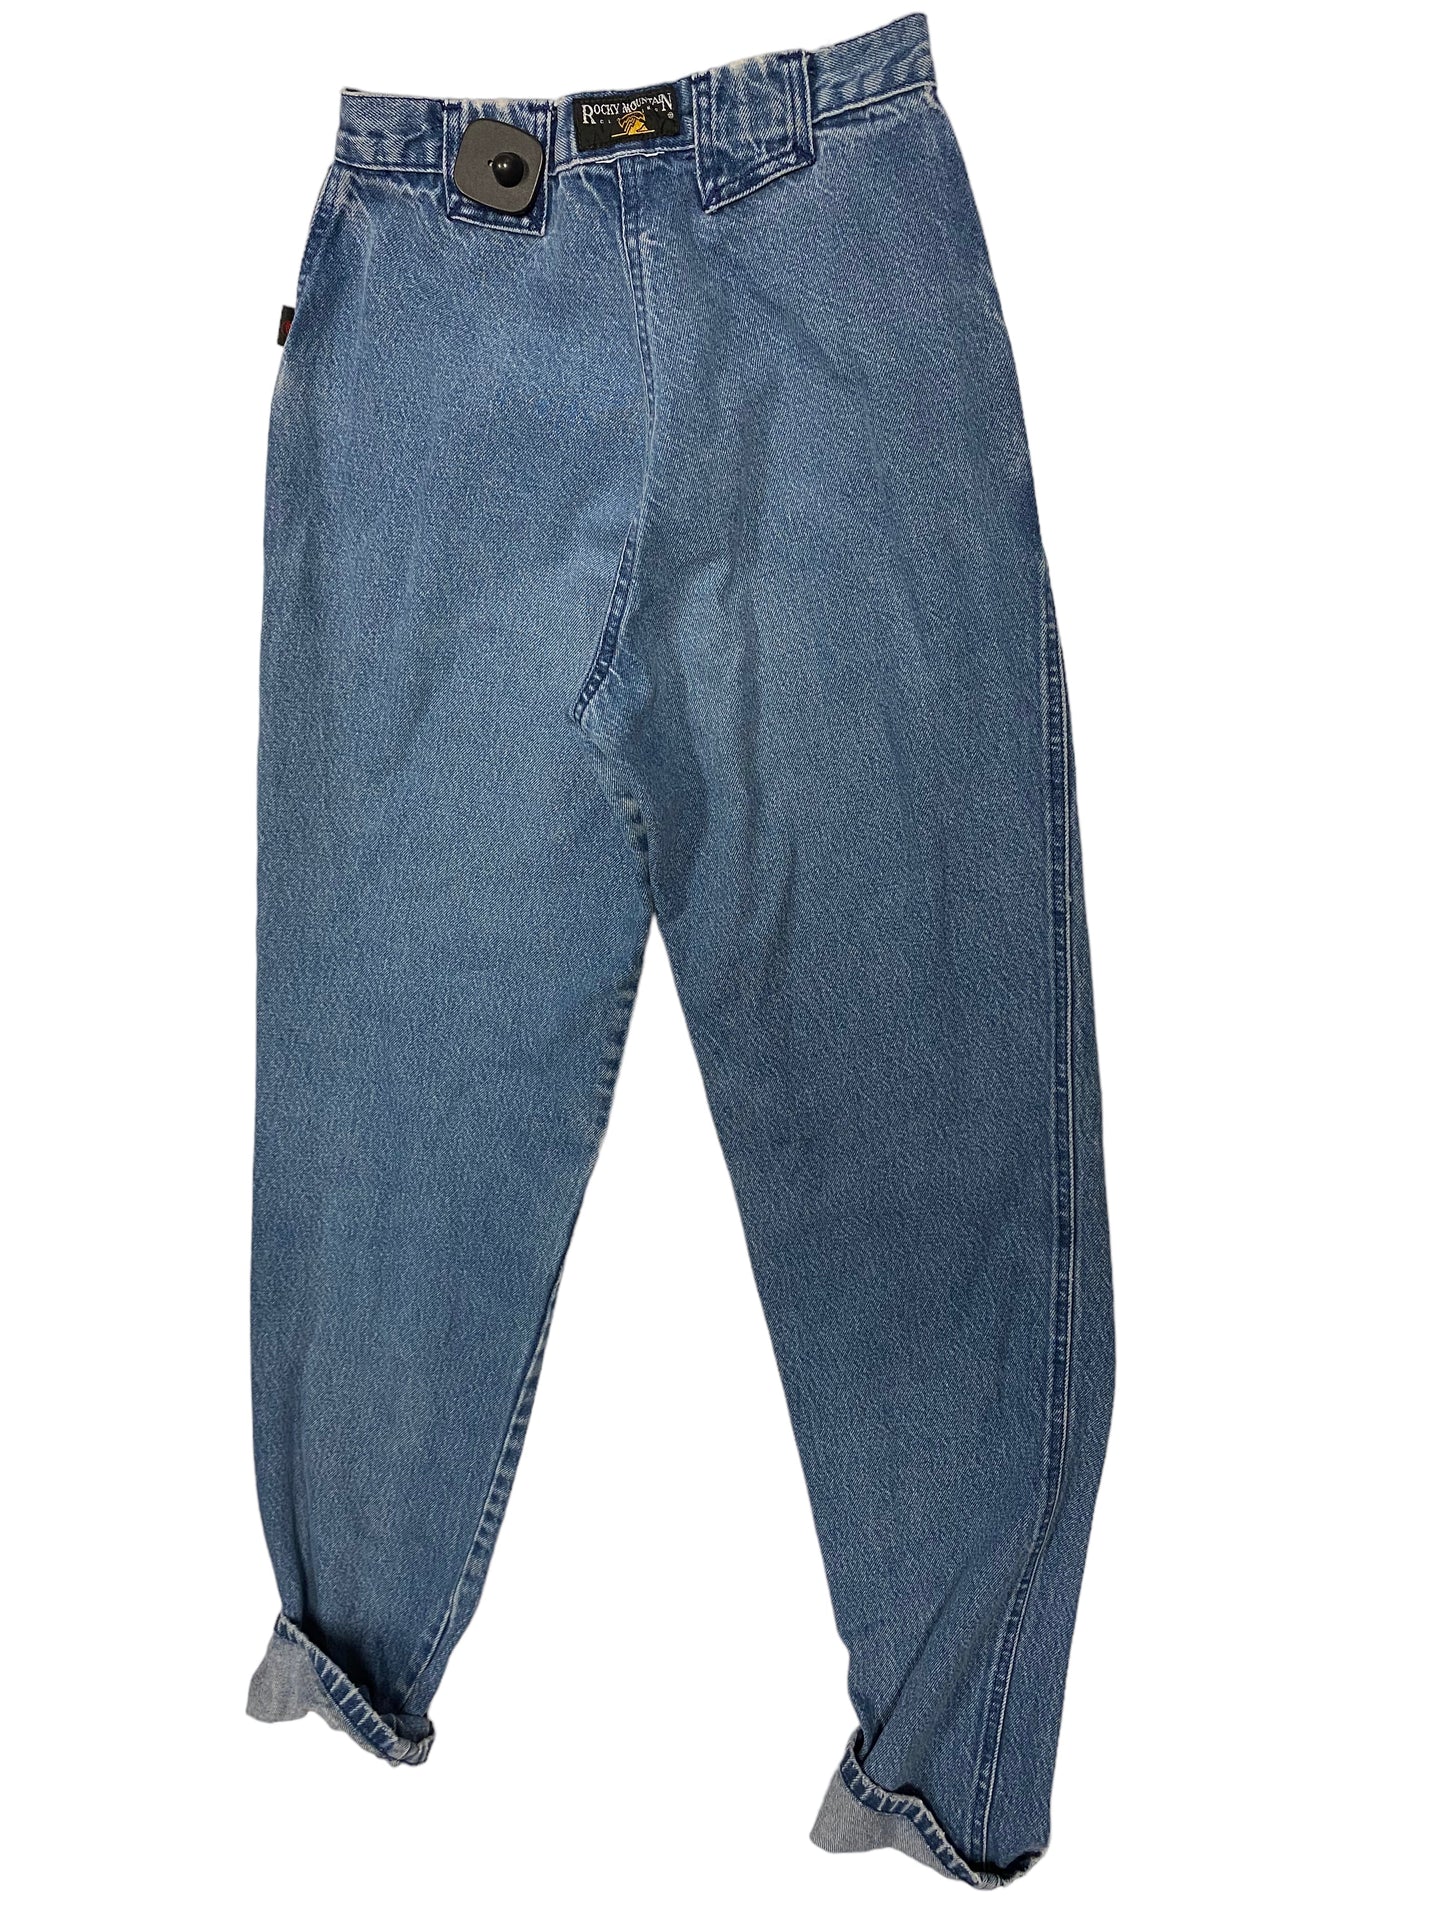 Blue Denim Jeans Straight rocky mountain, Size 8